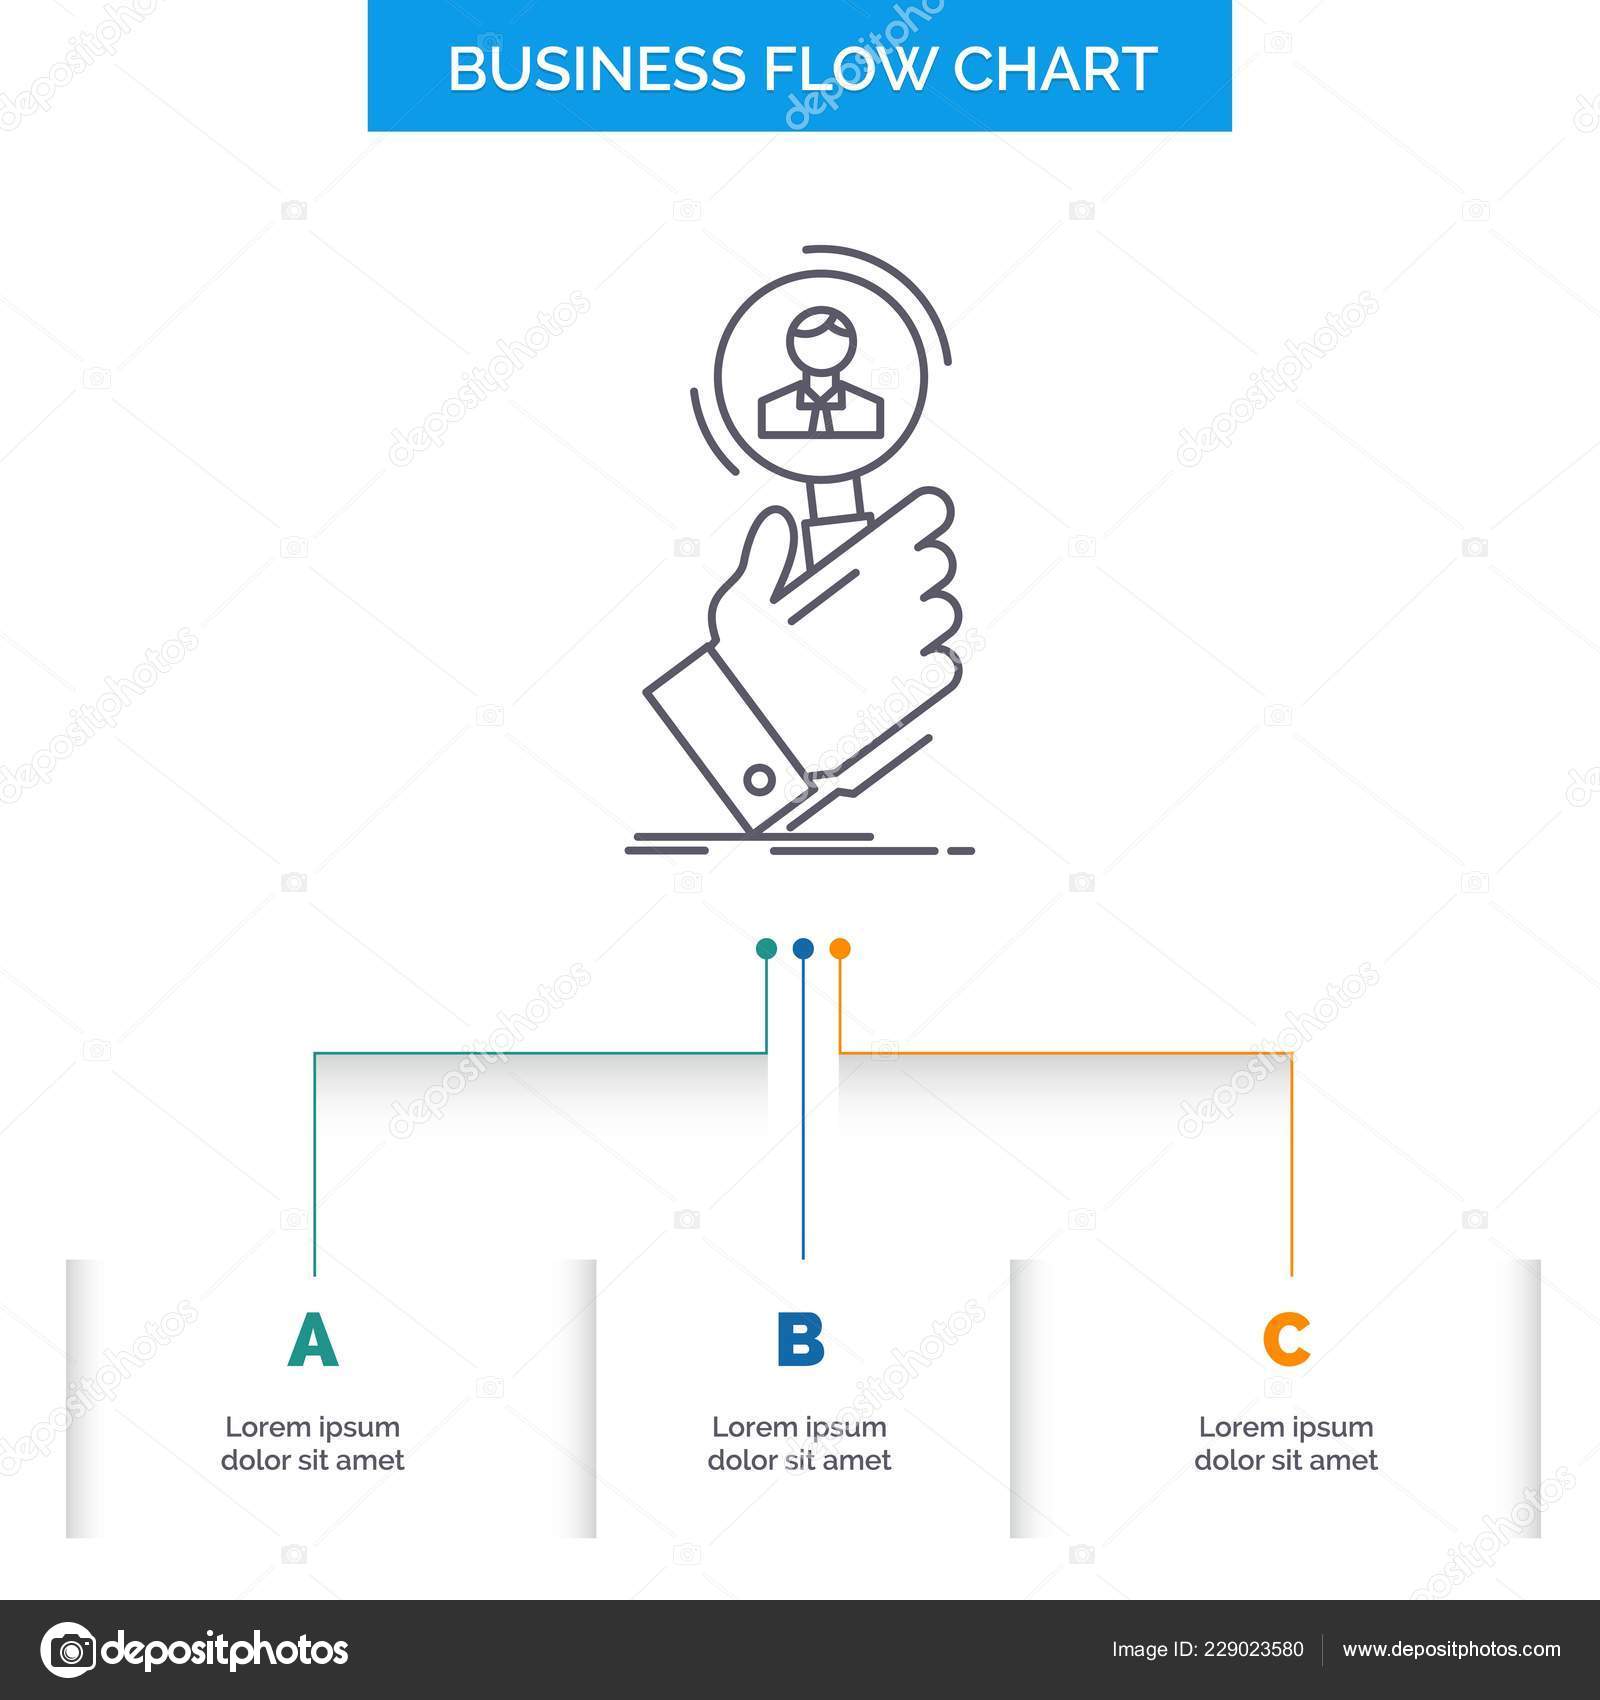 Human Resource Planning Flow Chart